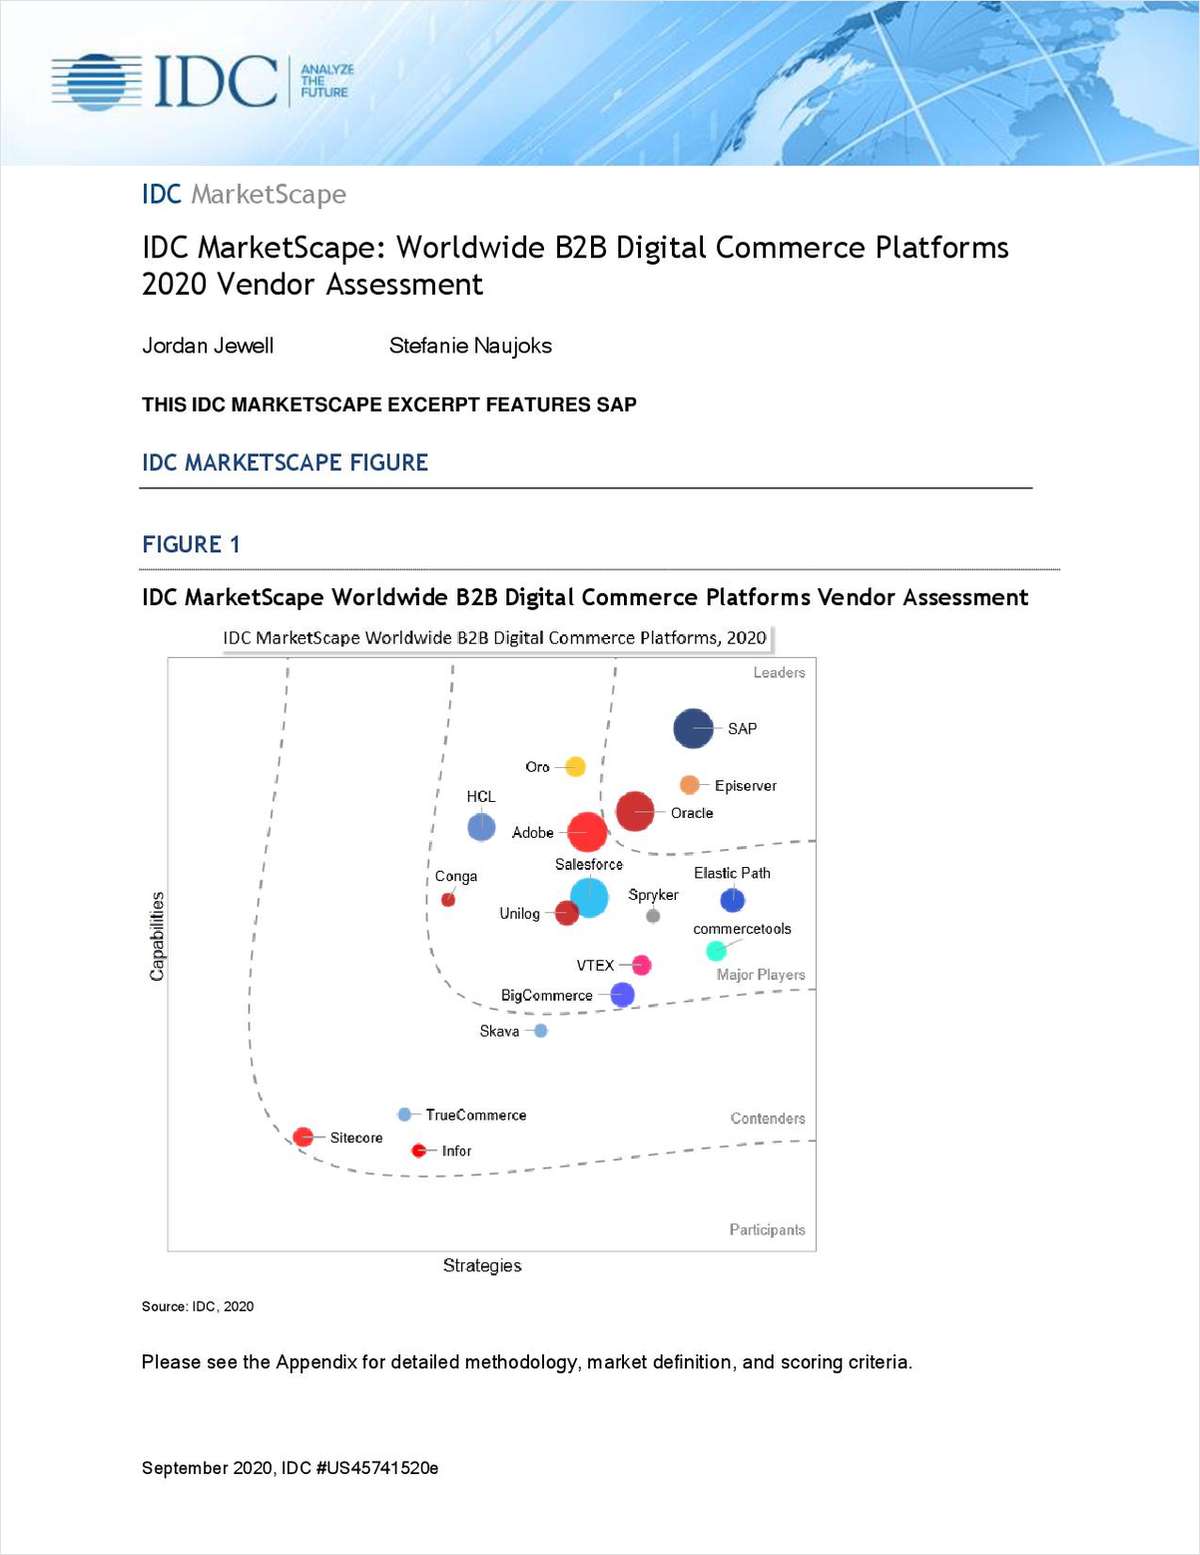 IDC MarketScape: Worldwide B2B Digital Commerce Platforms 2020 Vendor Assessment